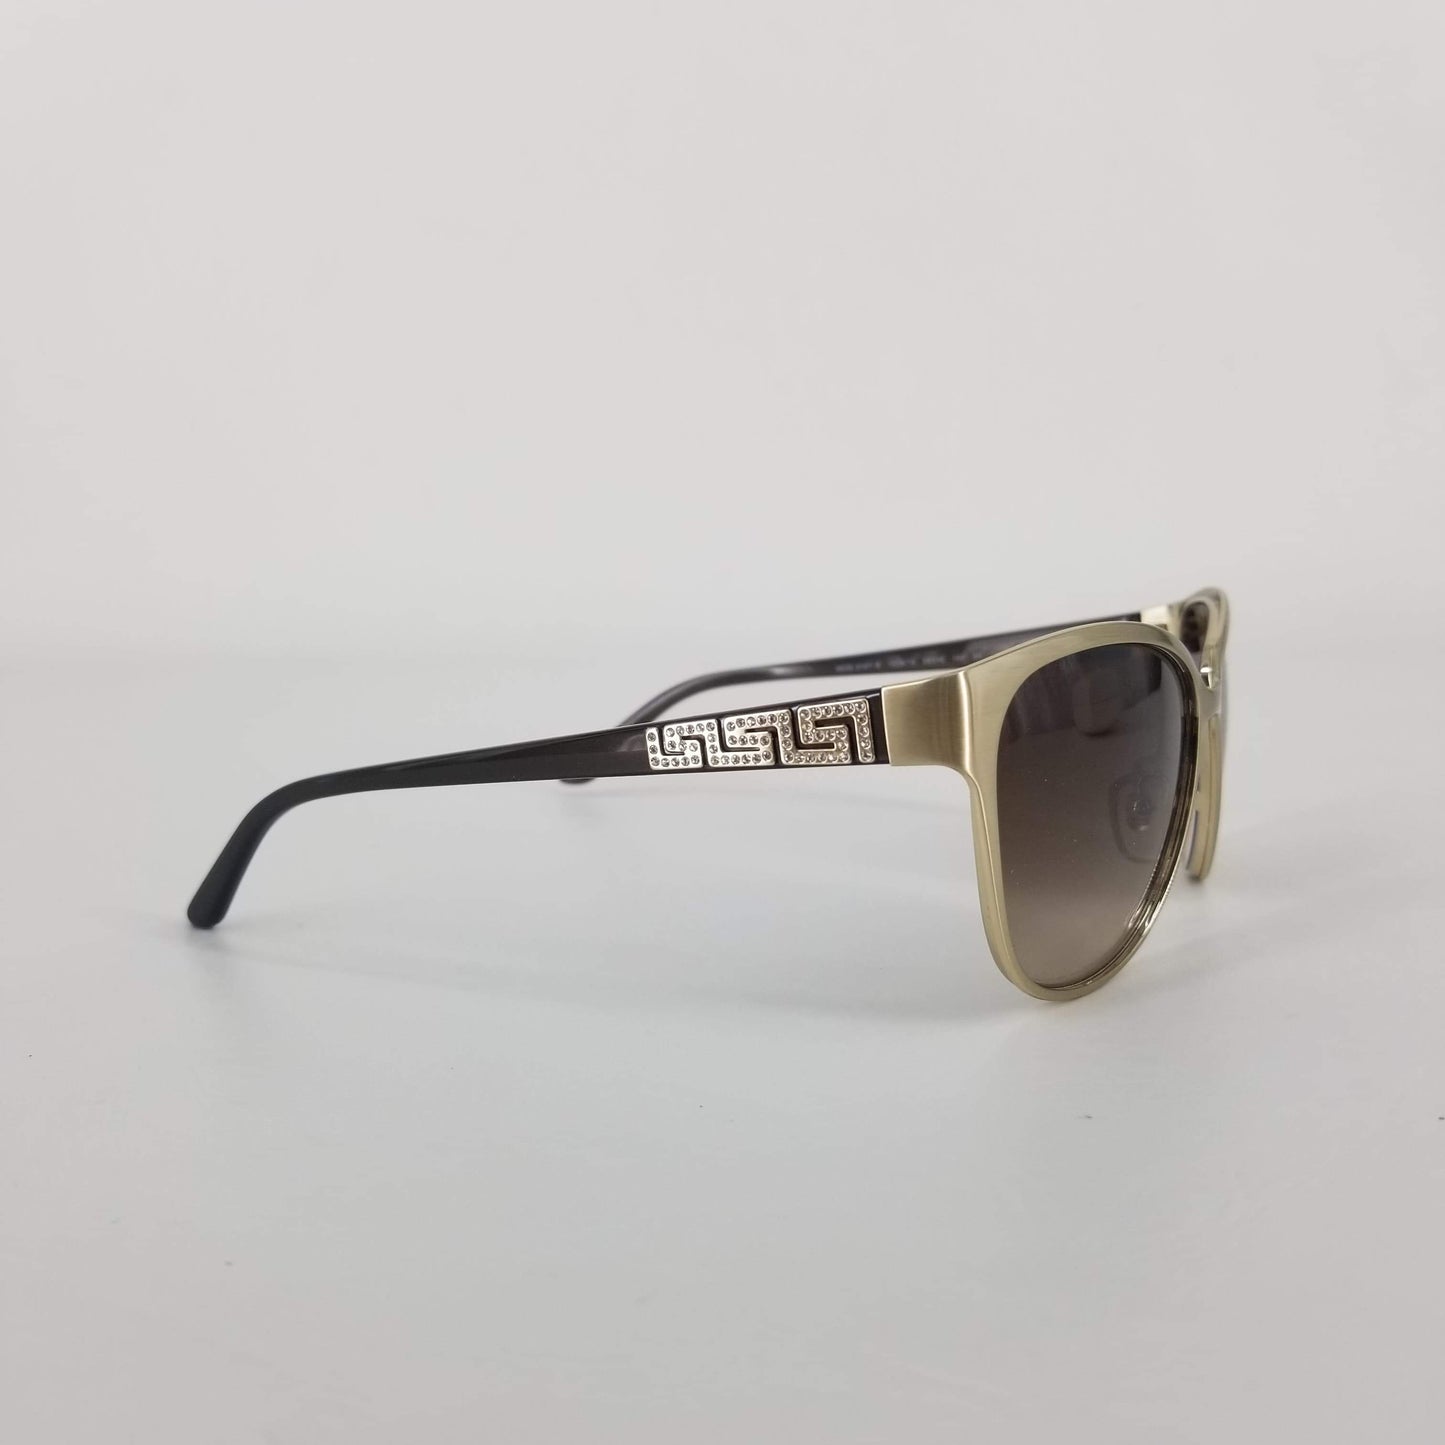 Authentic Versace Sunglasses 2147-B